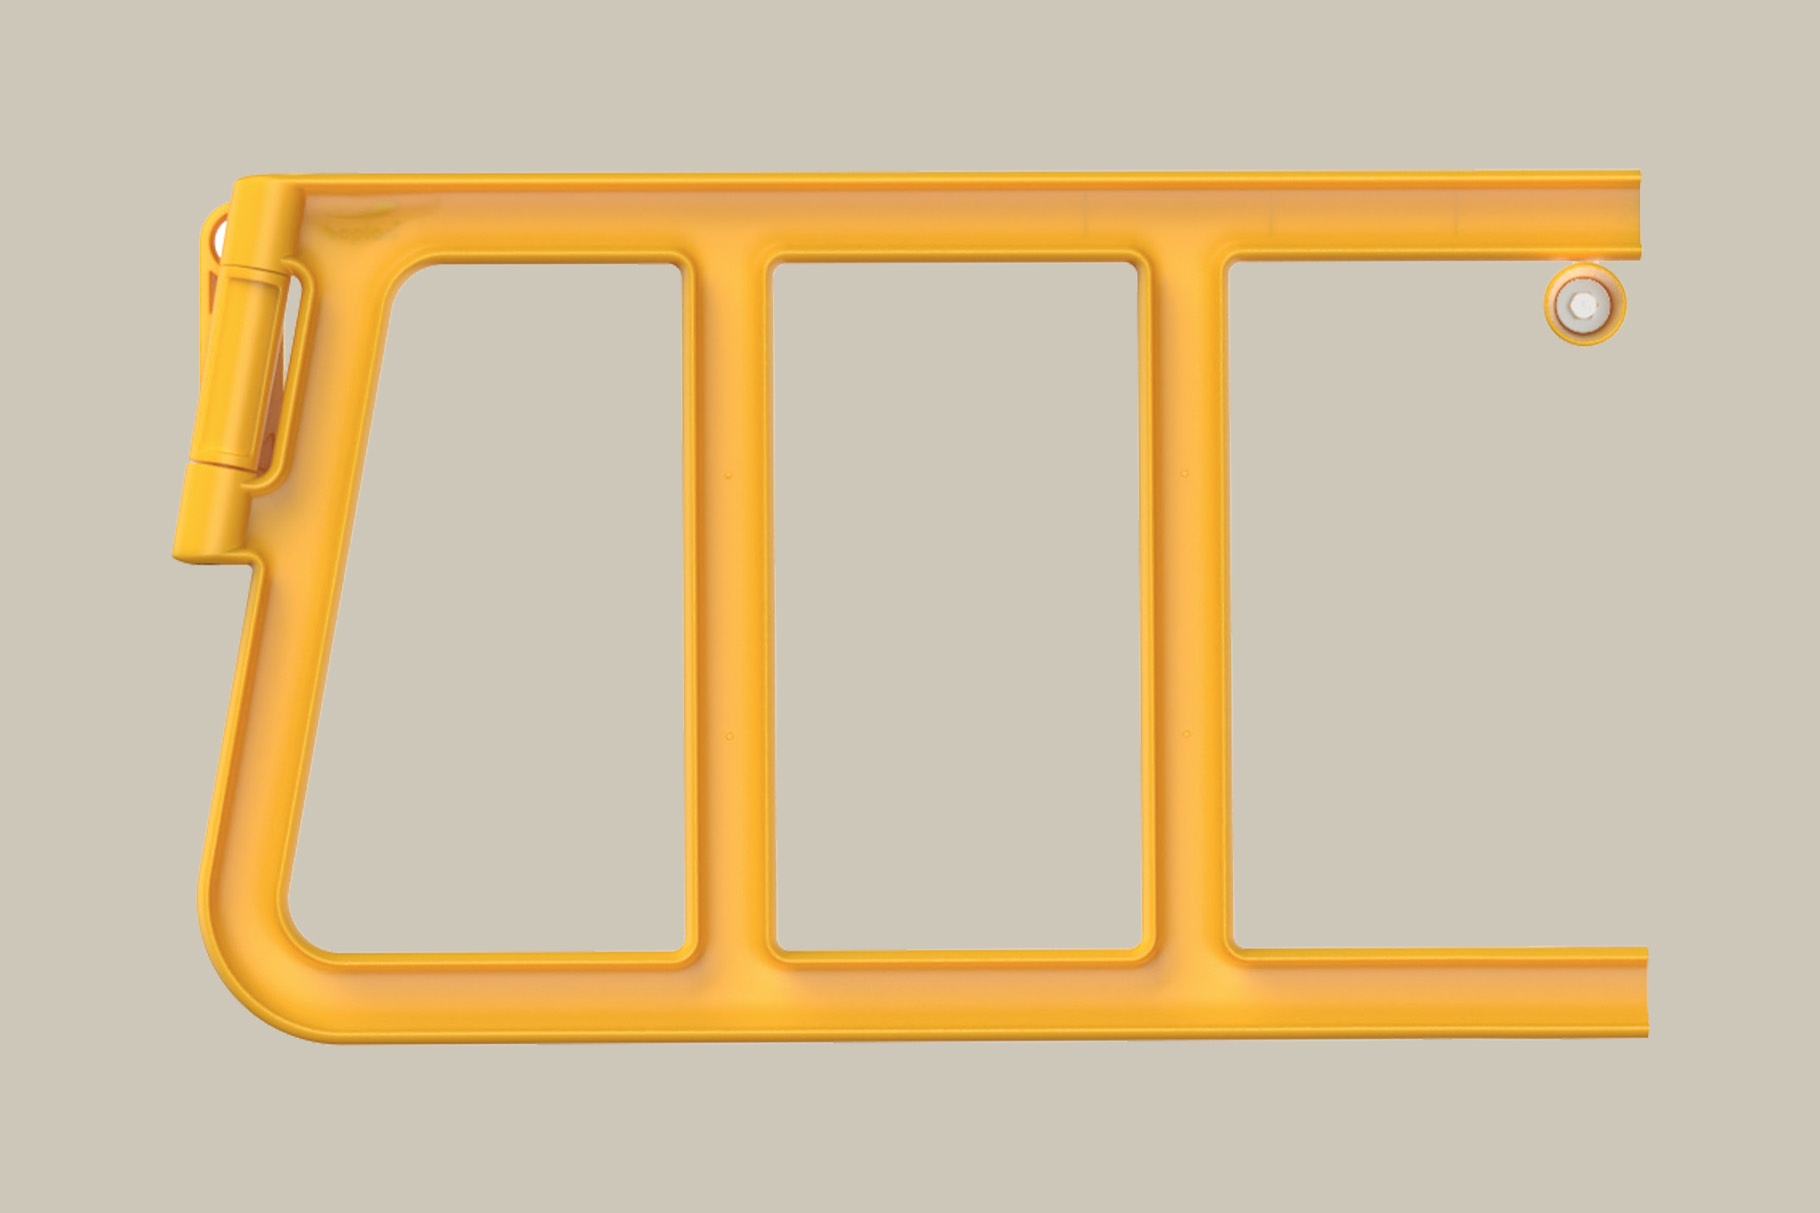 Rendering eines gelben Boplan Double AXES GATE